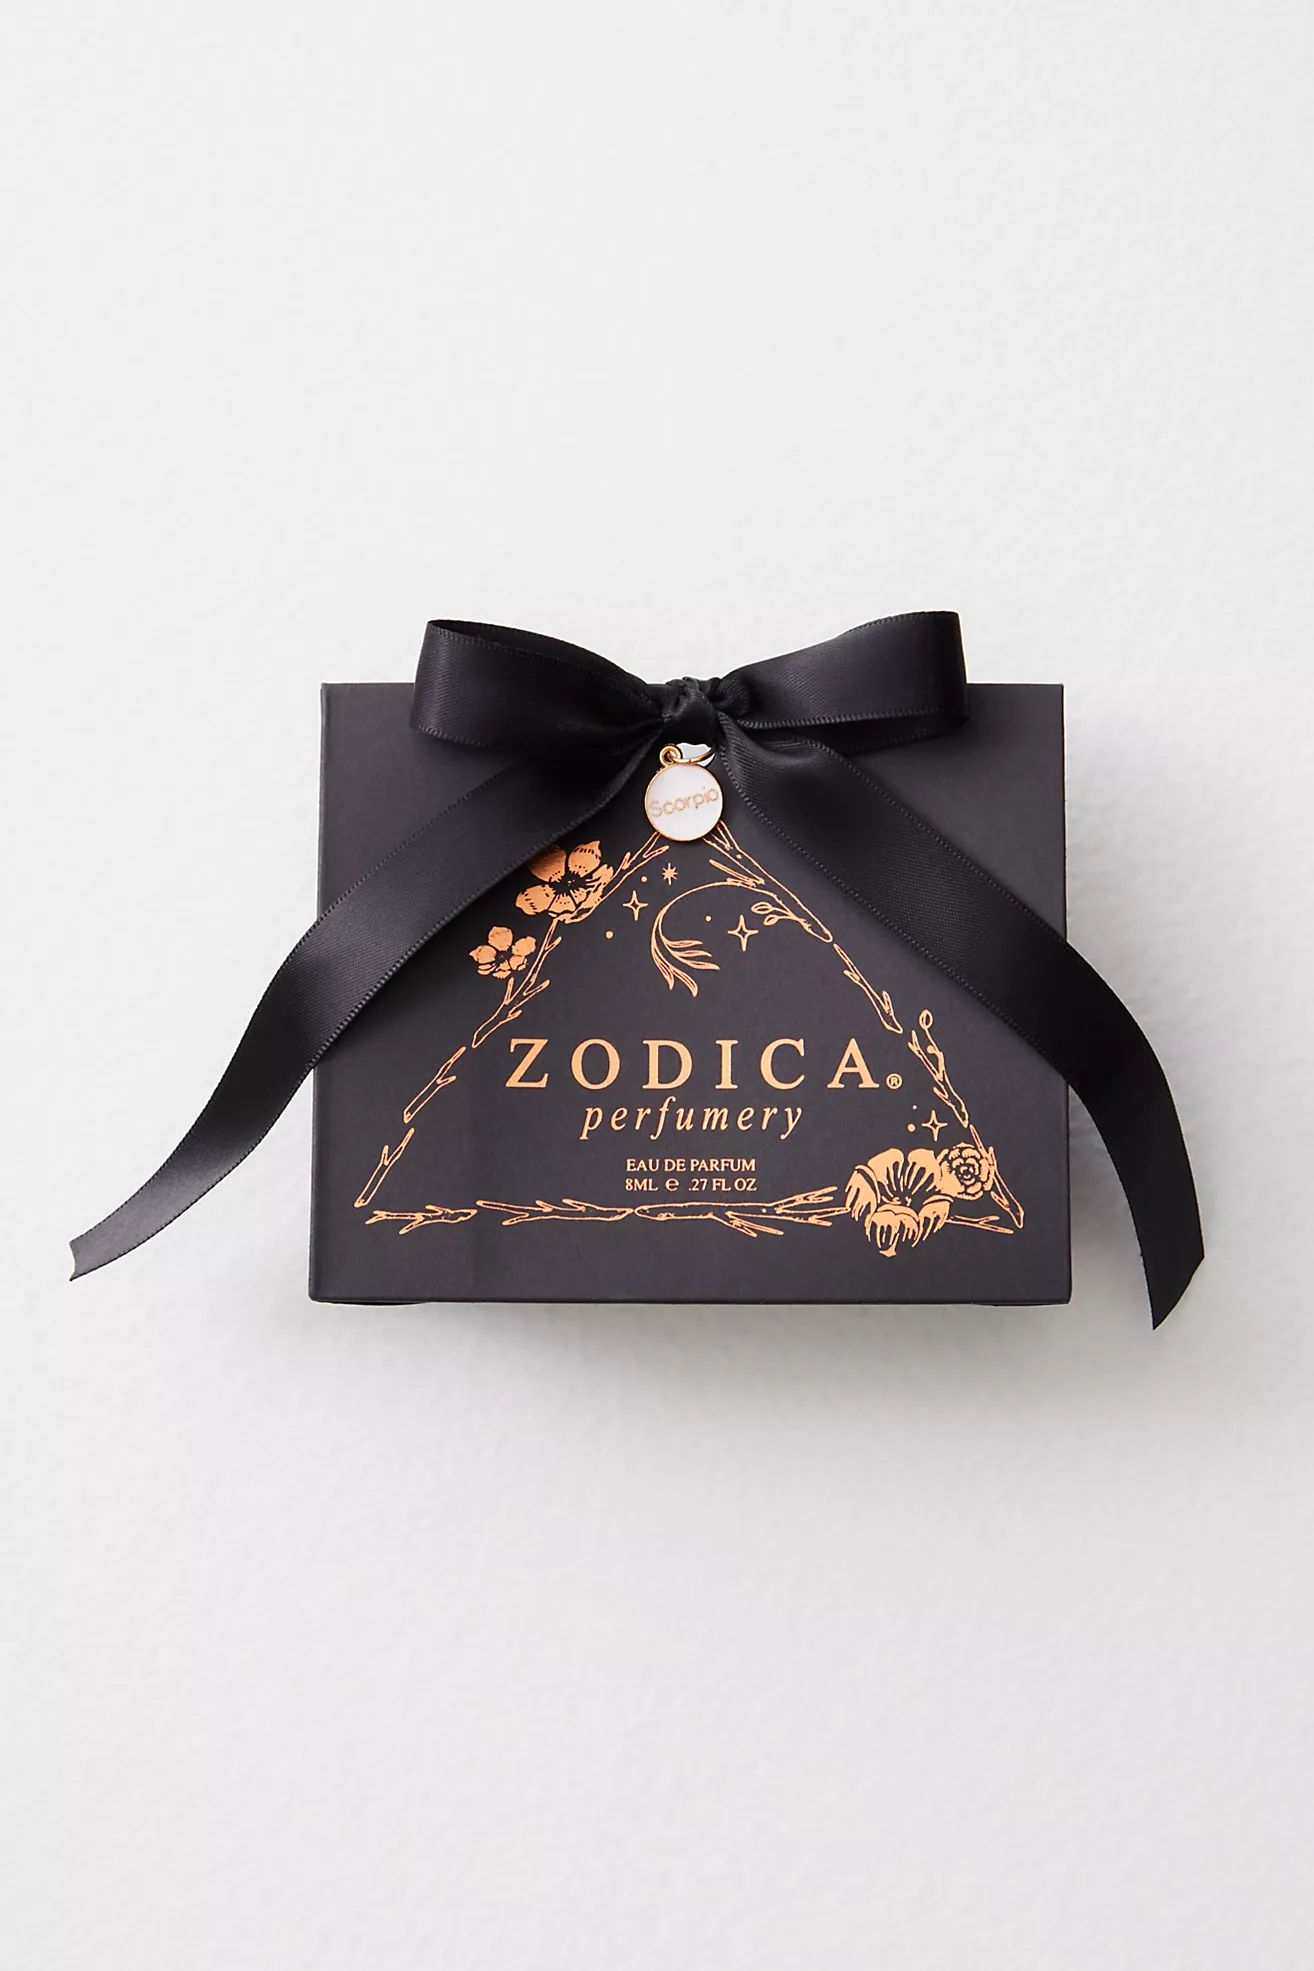 Zodica Perfumery Zodiac Perfume | Free People (Global - UK&FR Excluded)